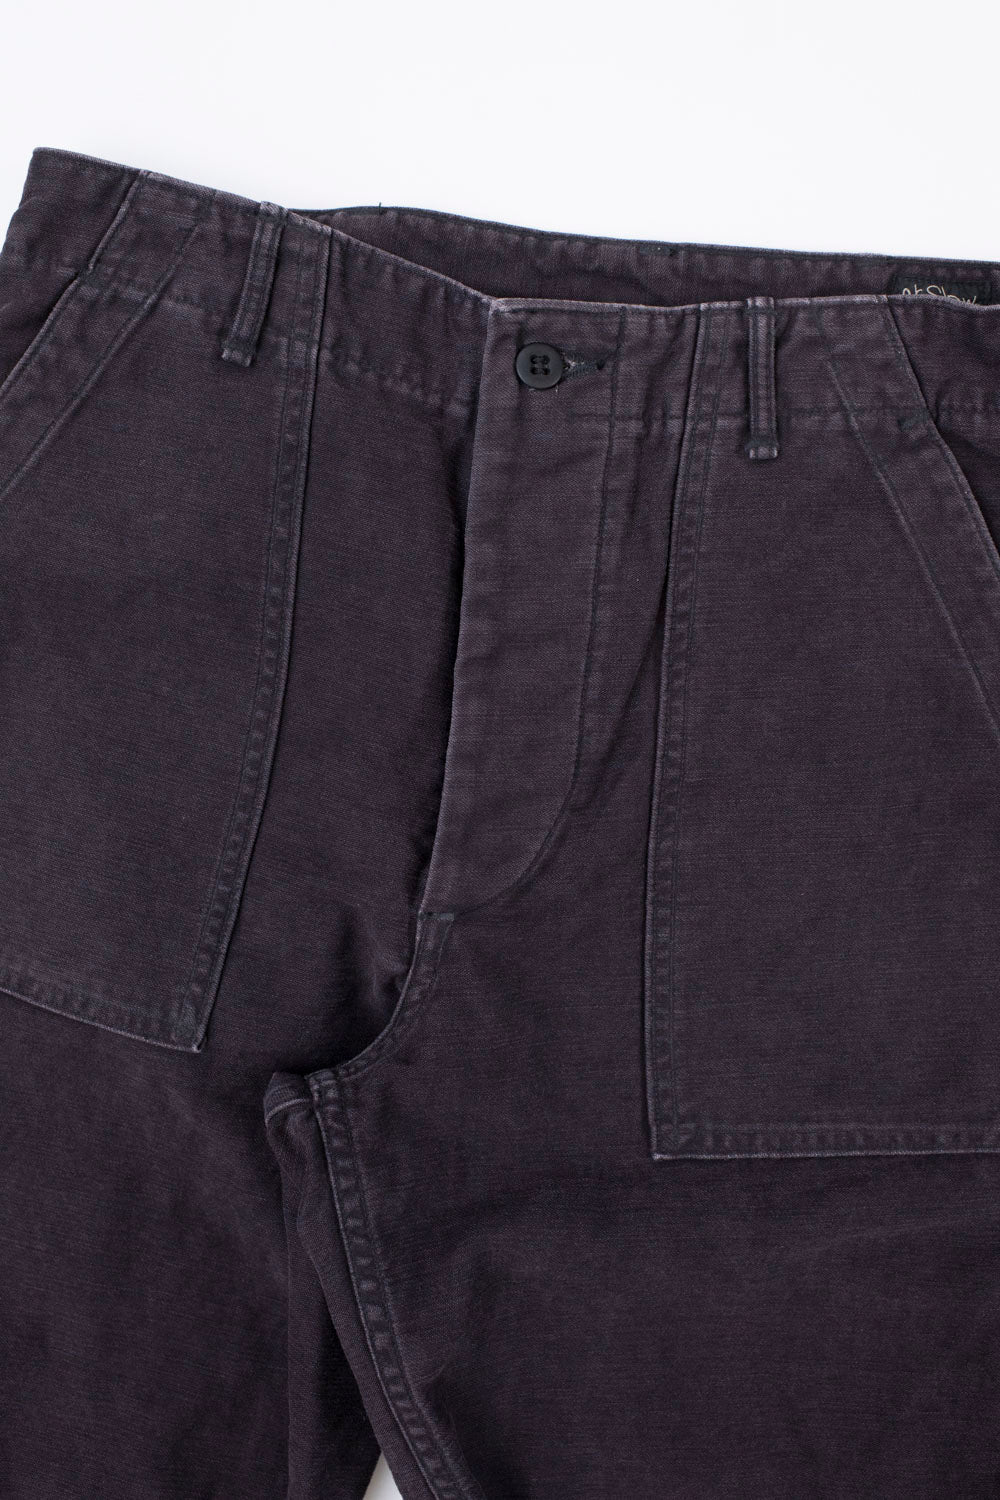 01-5002-61S - Fatigue Pants Reverse Sateen - Standard Fit - Black Stone